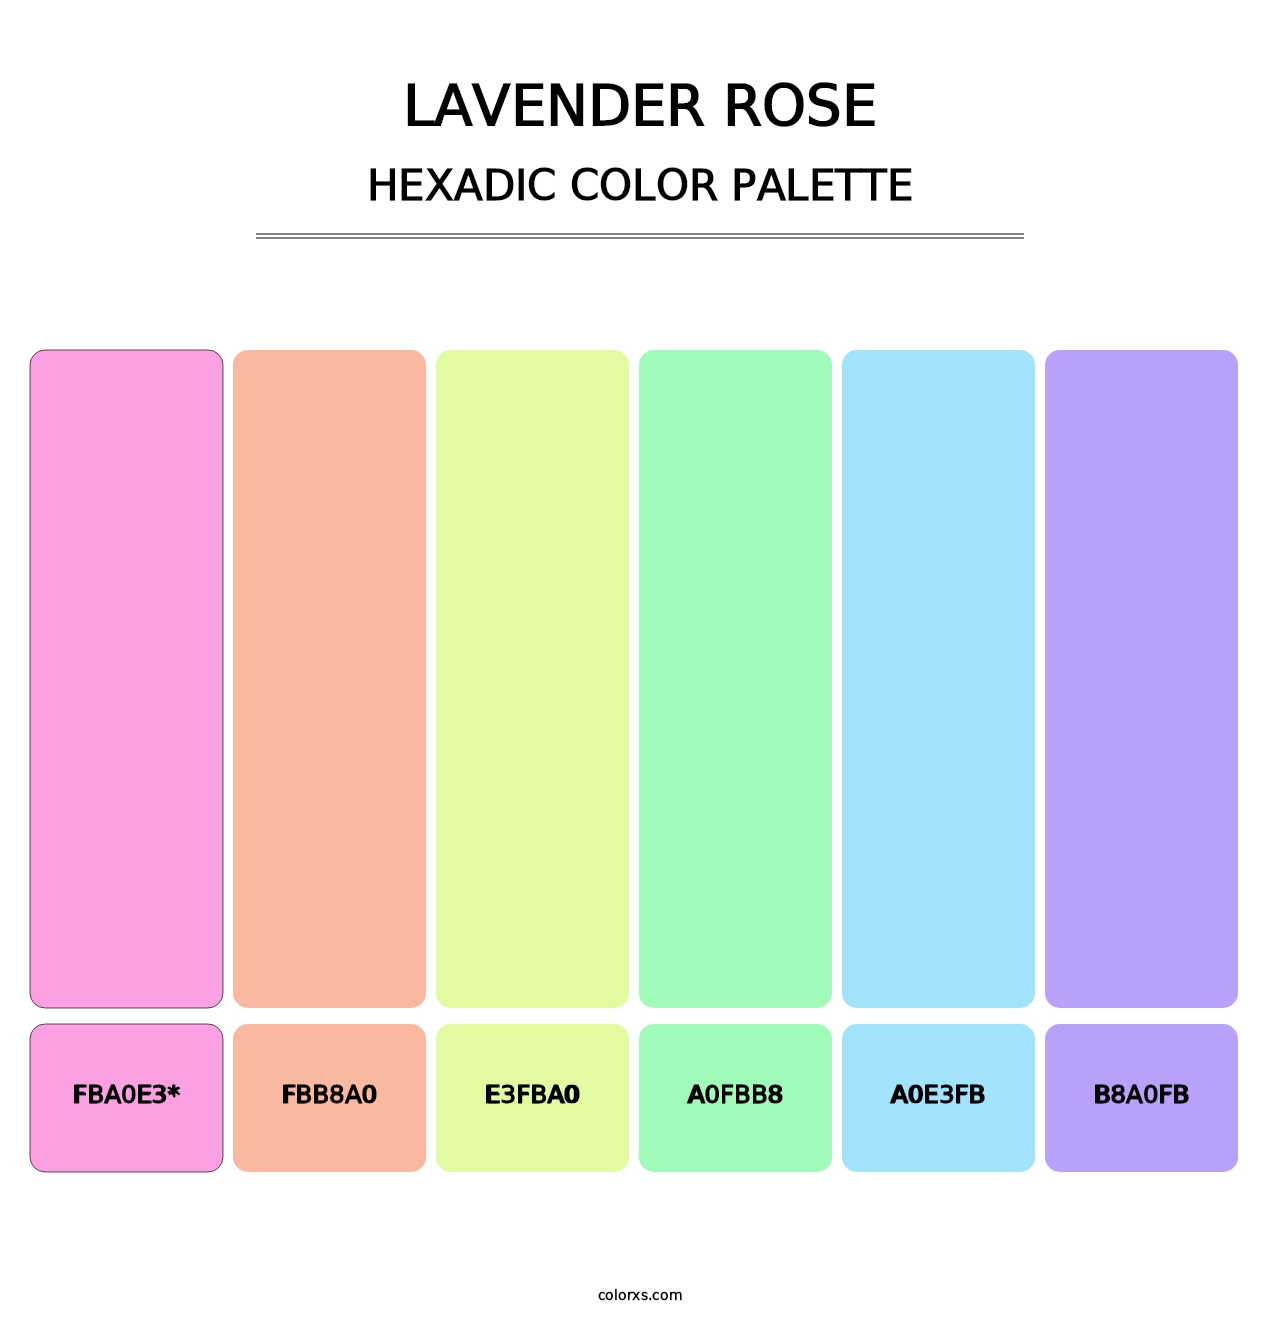 Lavender Rose - Hexadic Color Palette